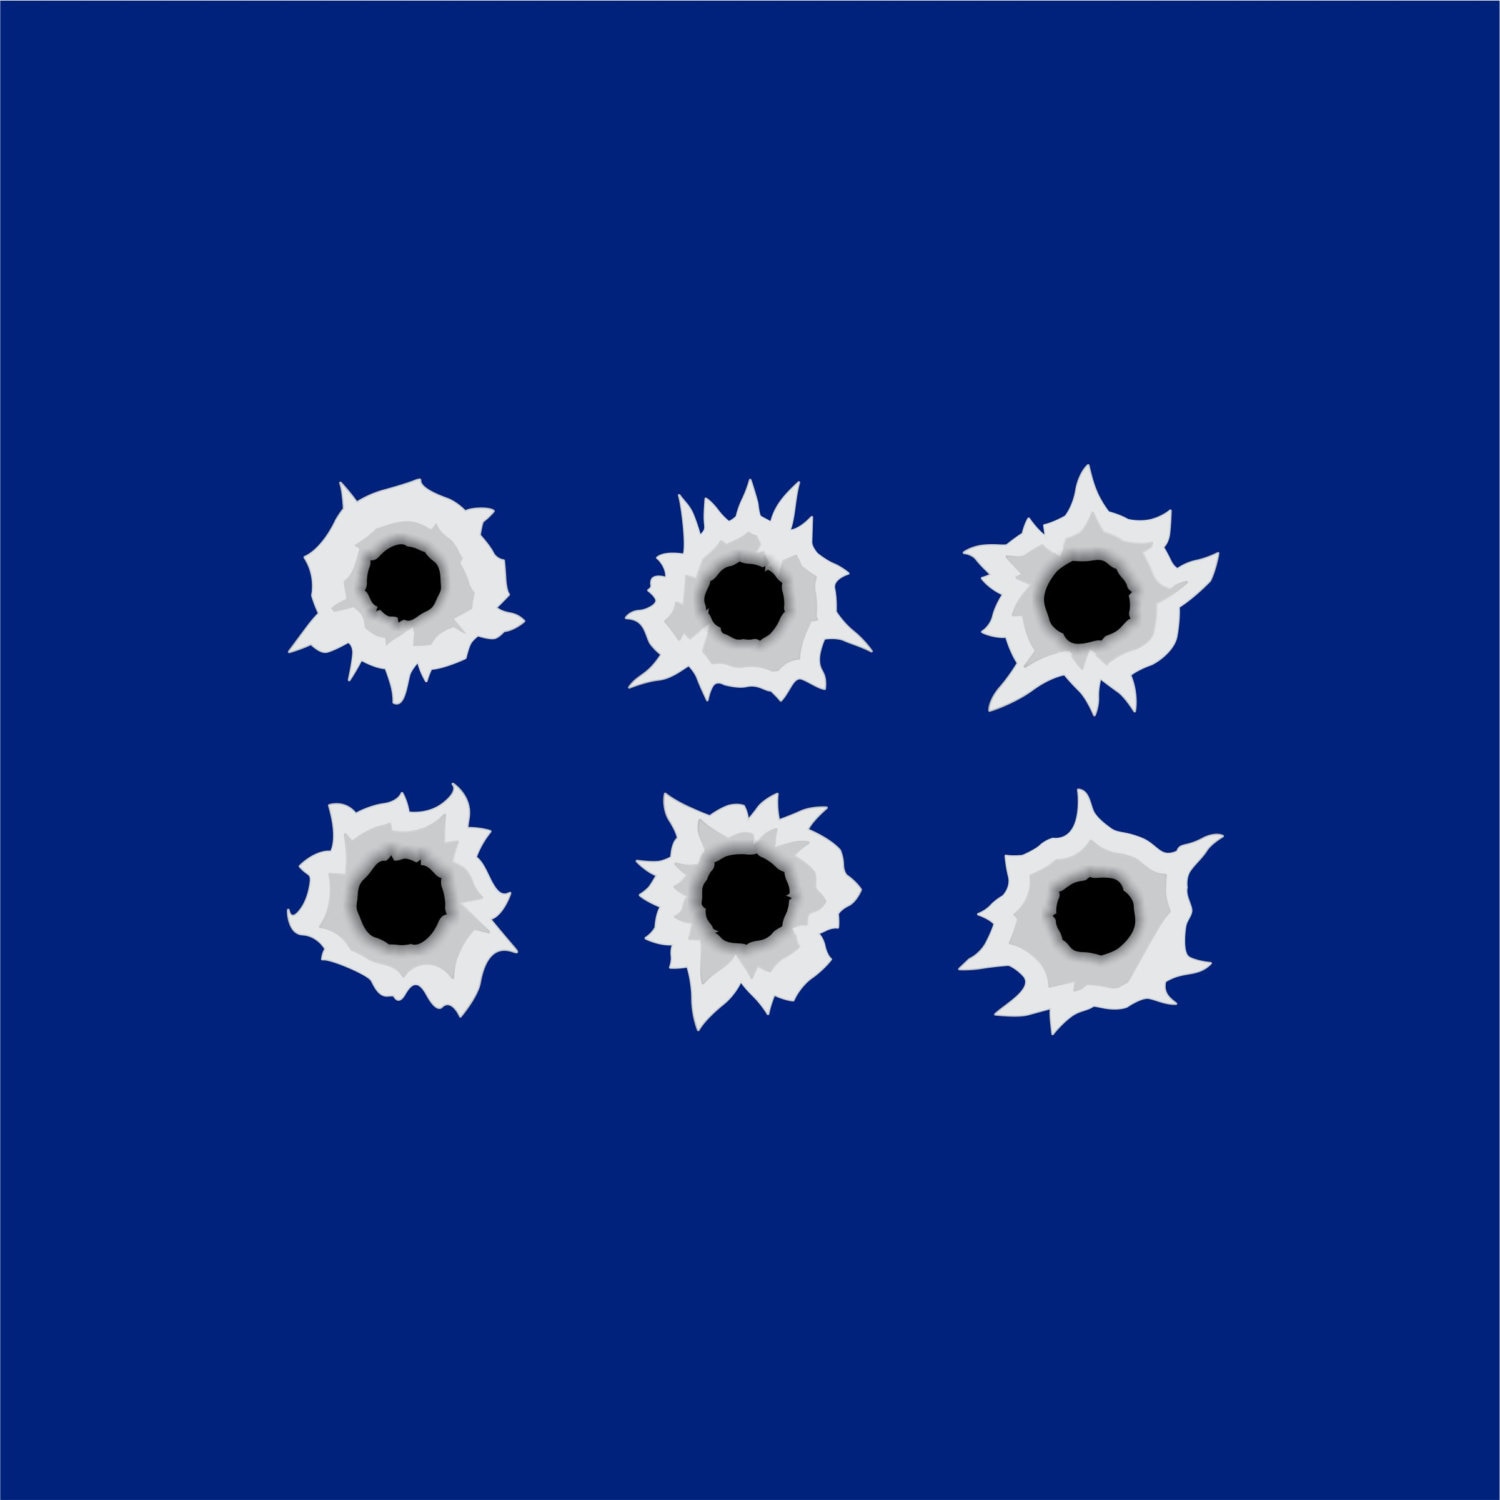 Bullet holes sticker - .de